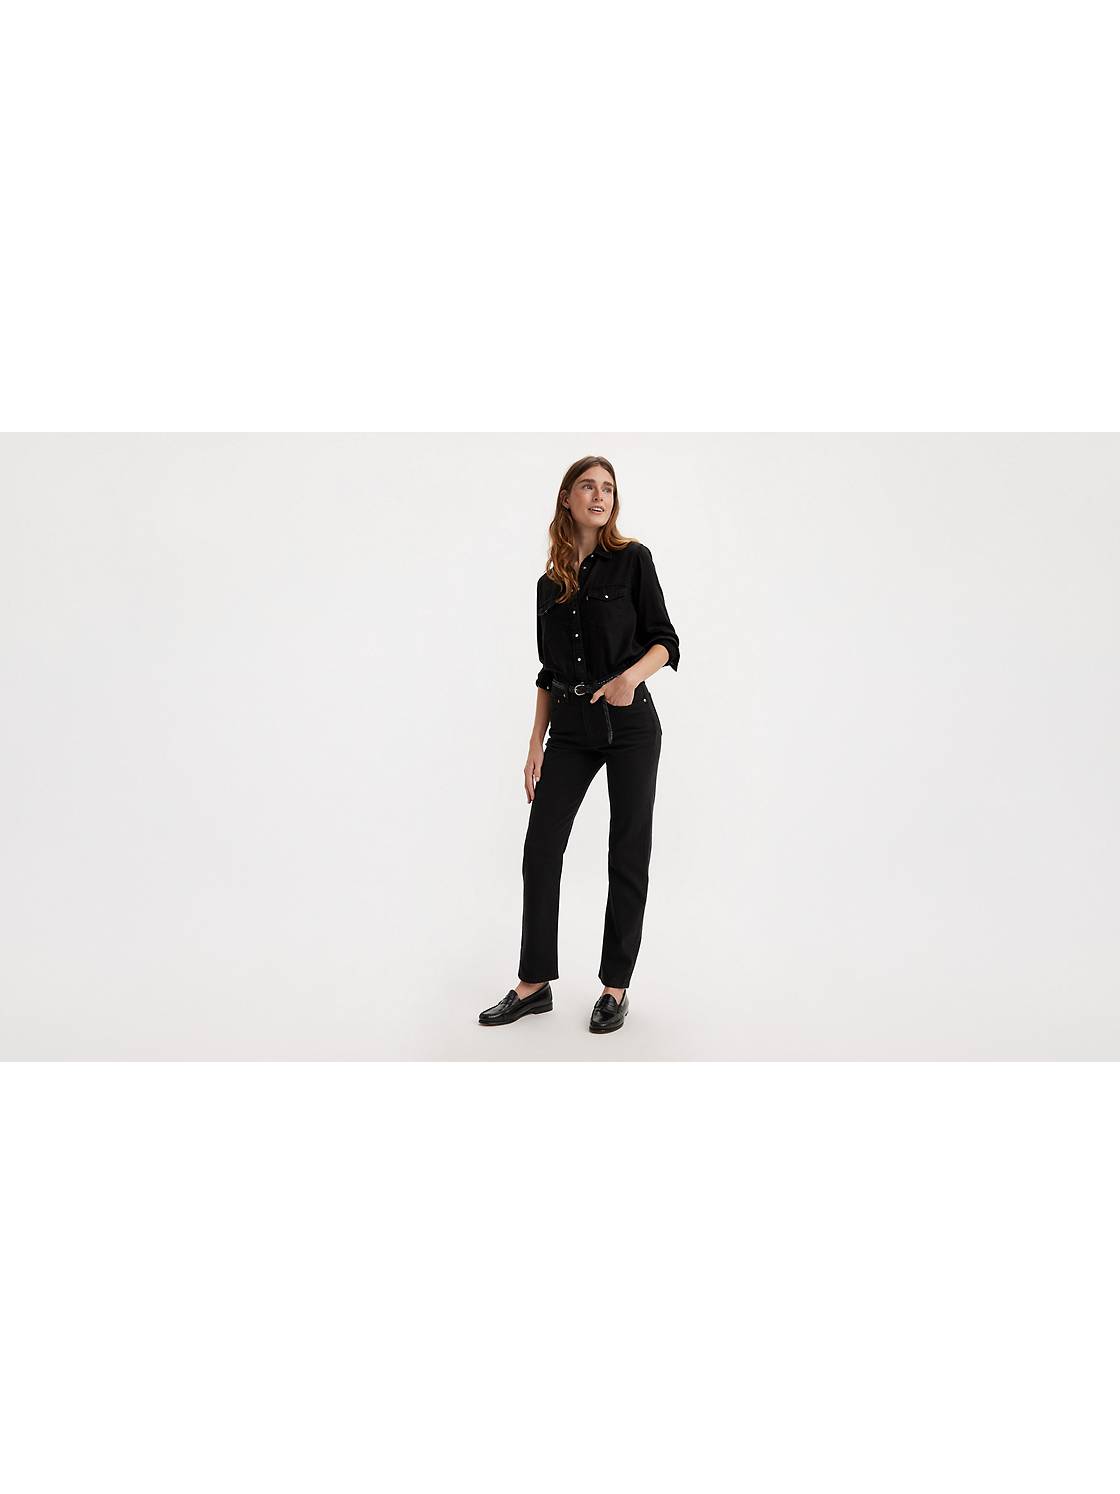 Women's Black Jeans: Shop Black Denim Jeans for Women